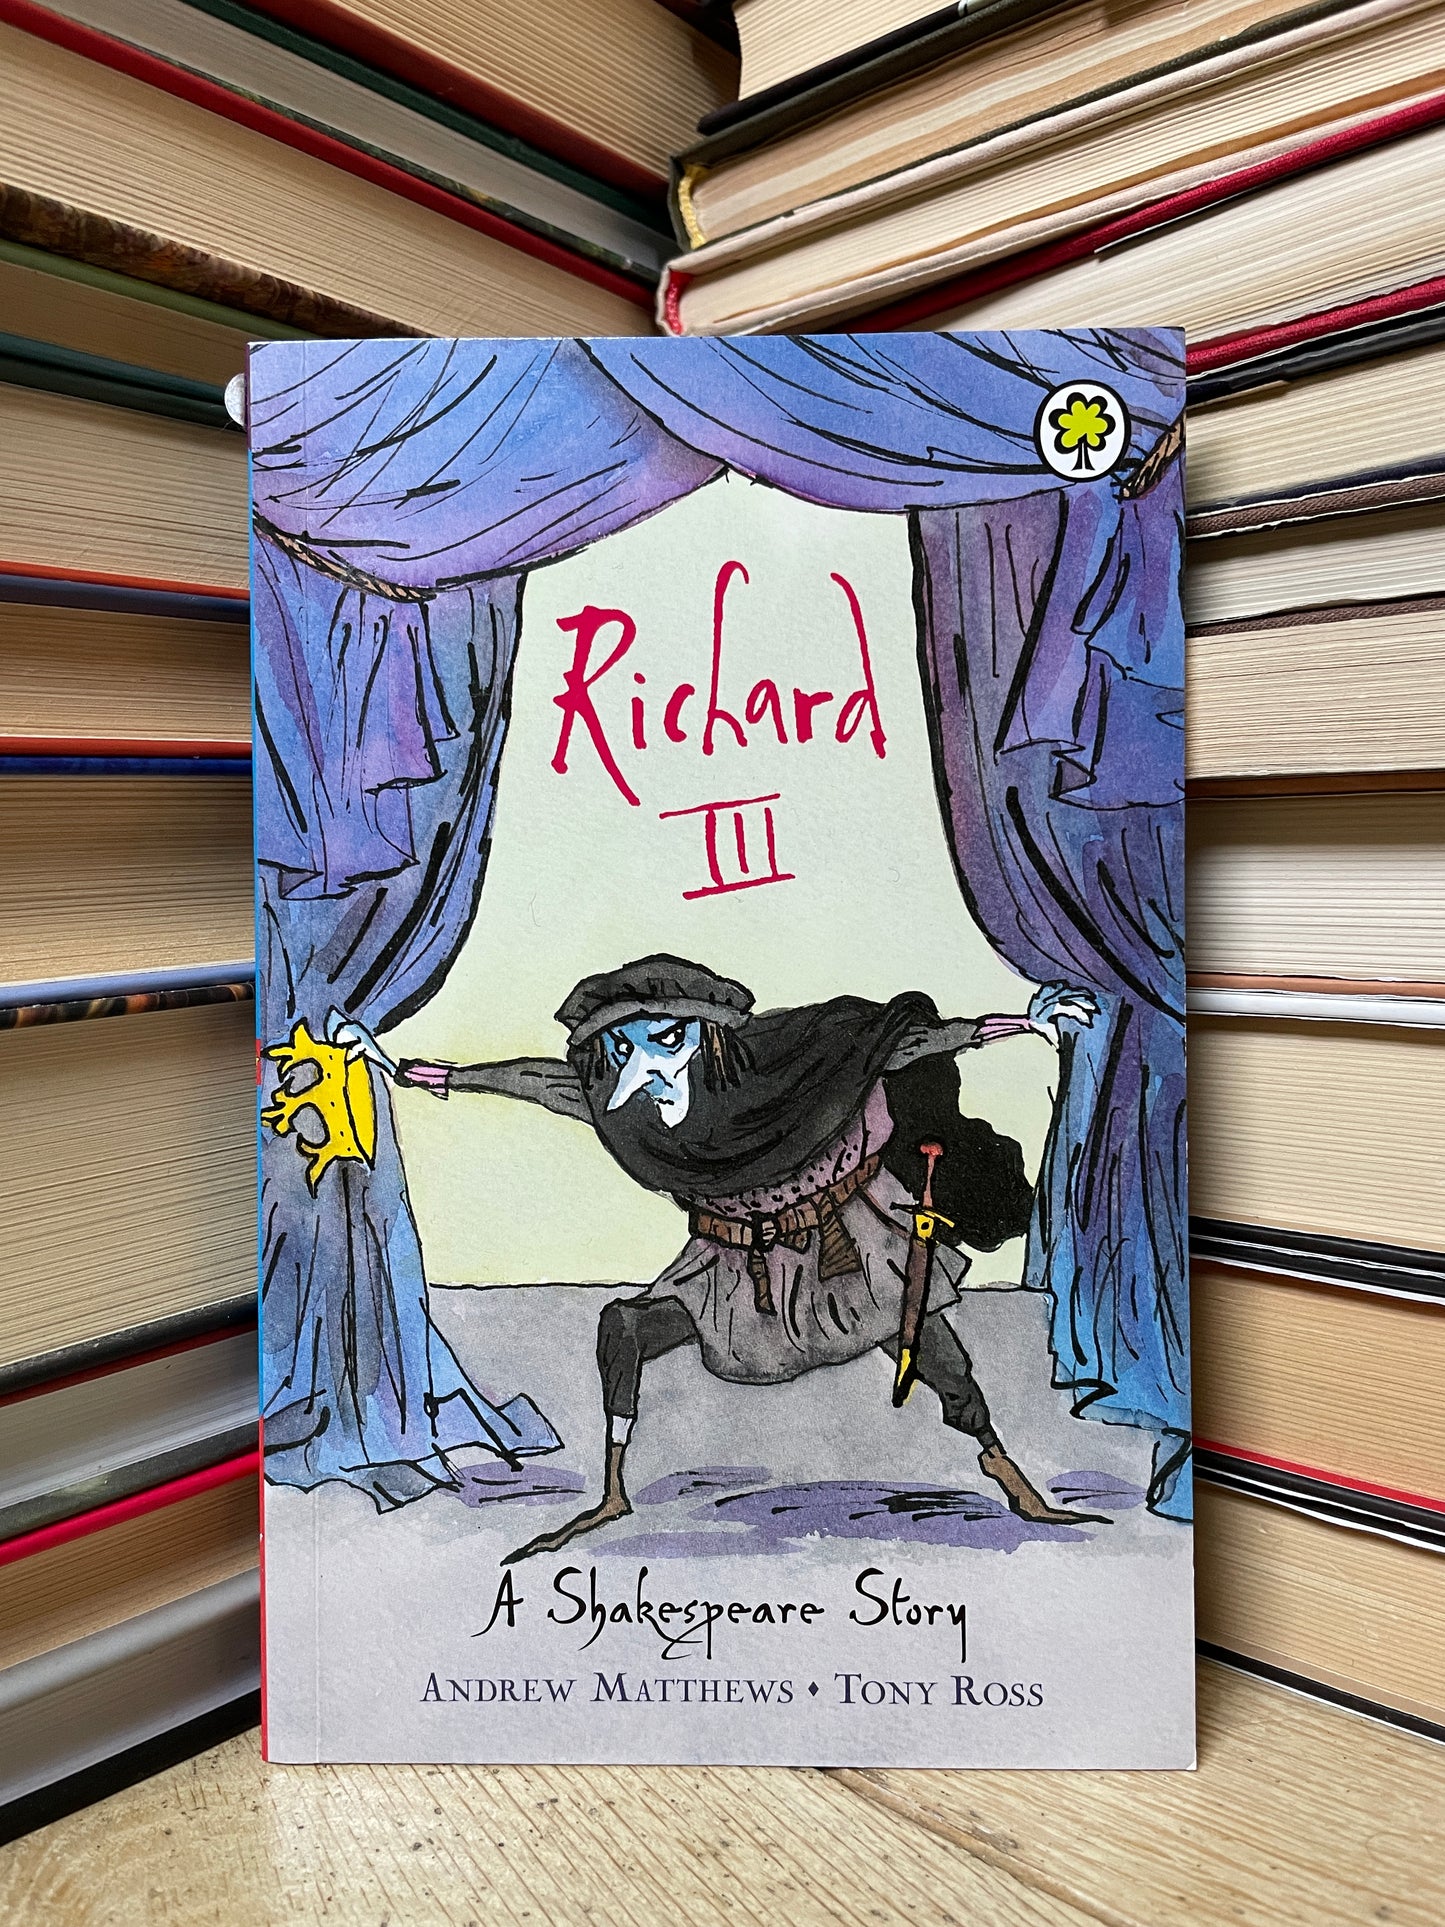 Andrew Matthews, Tony Ross - A Shakespeare Story: Richard III